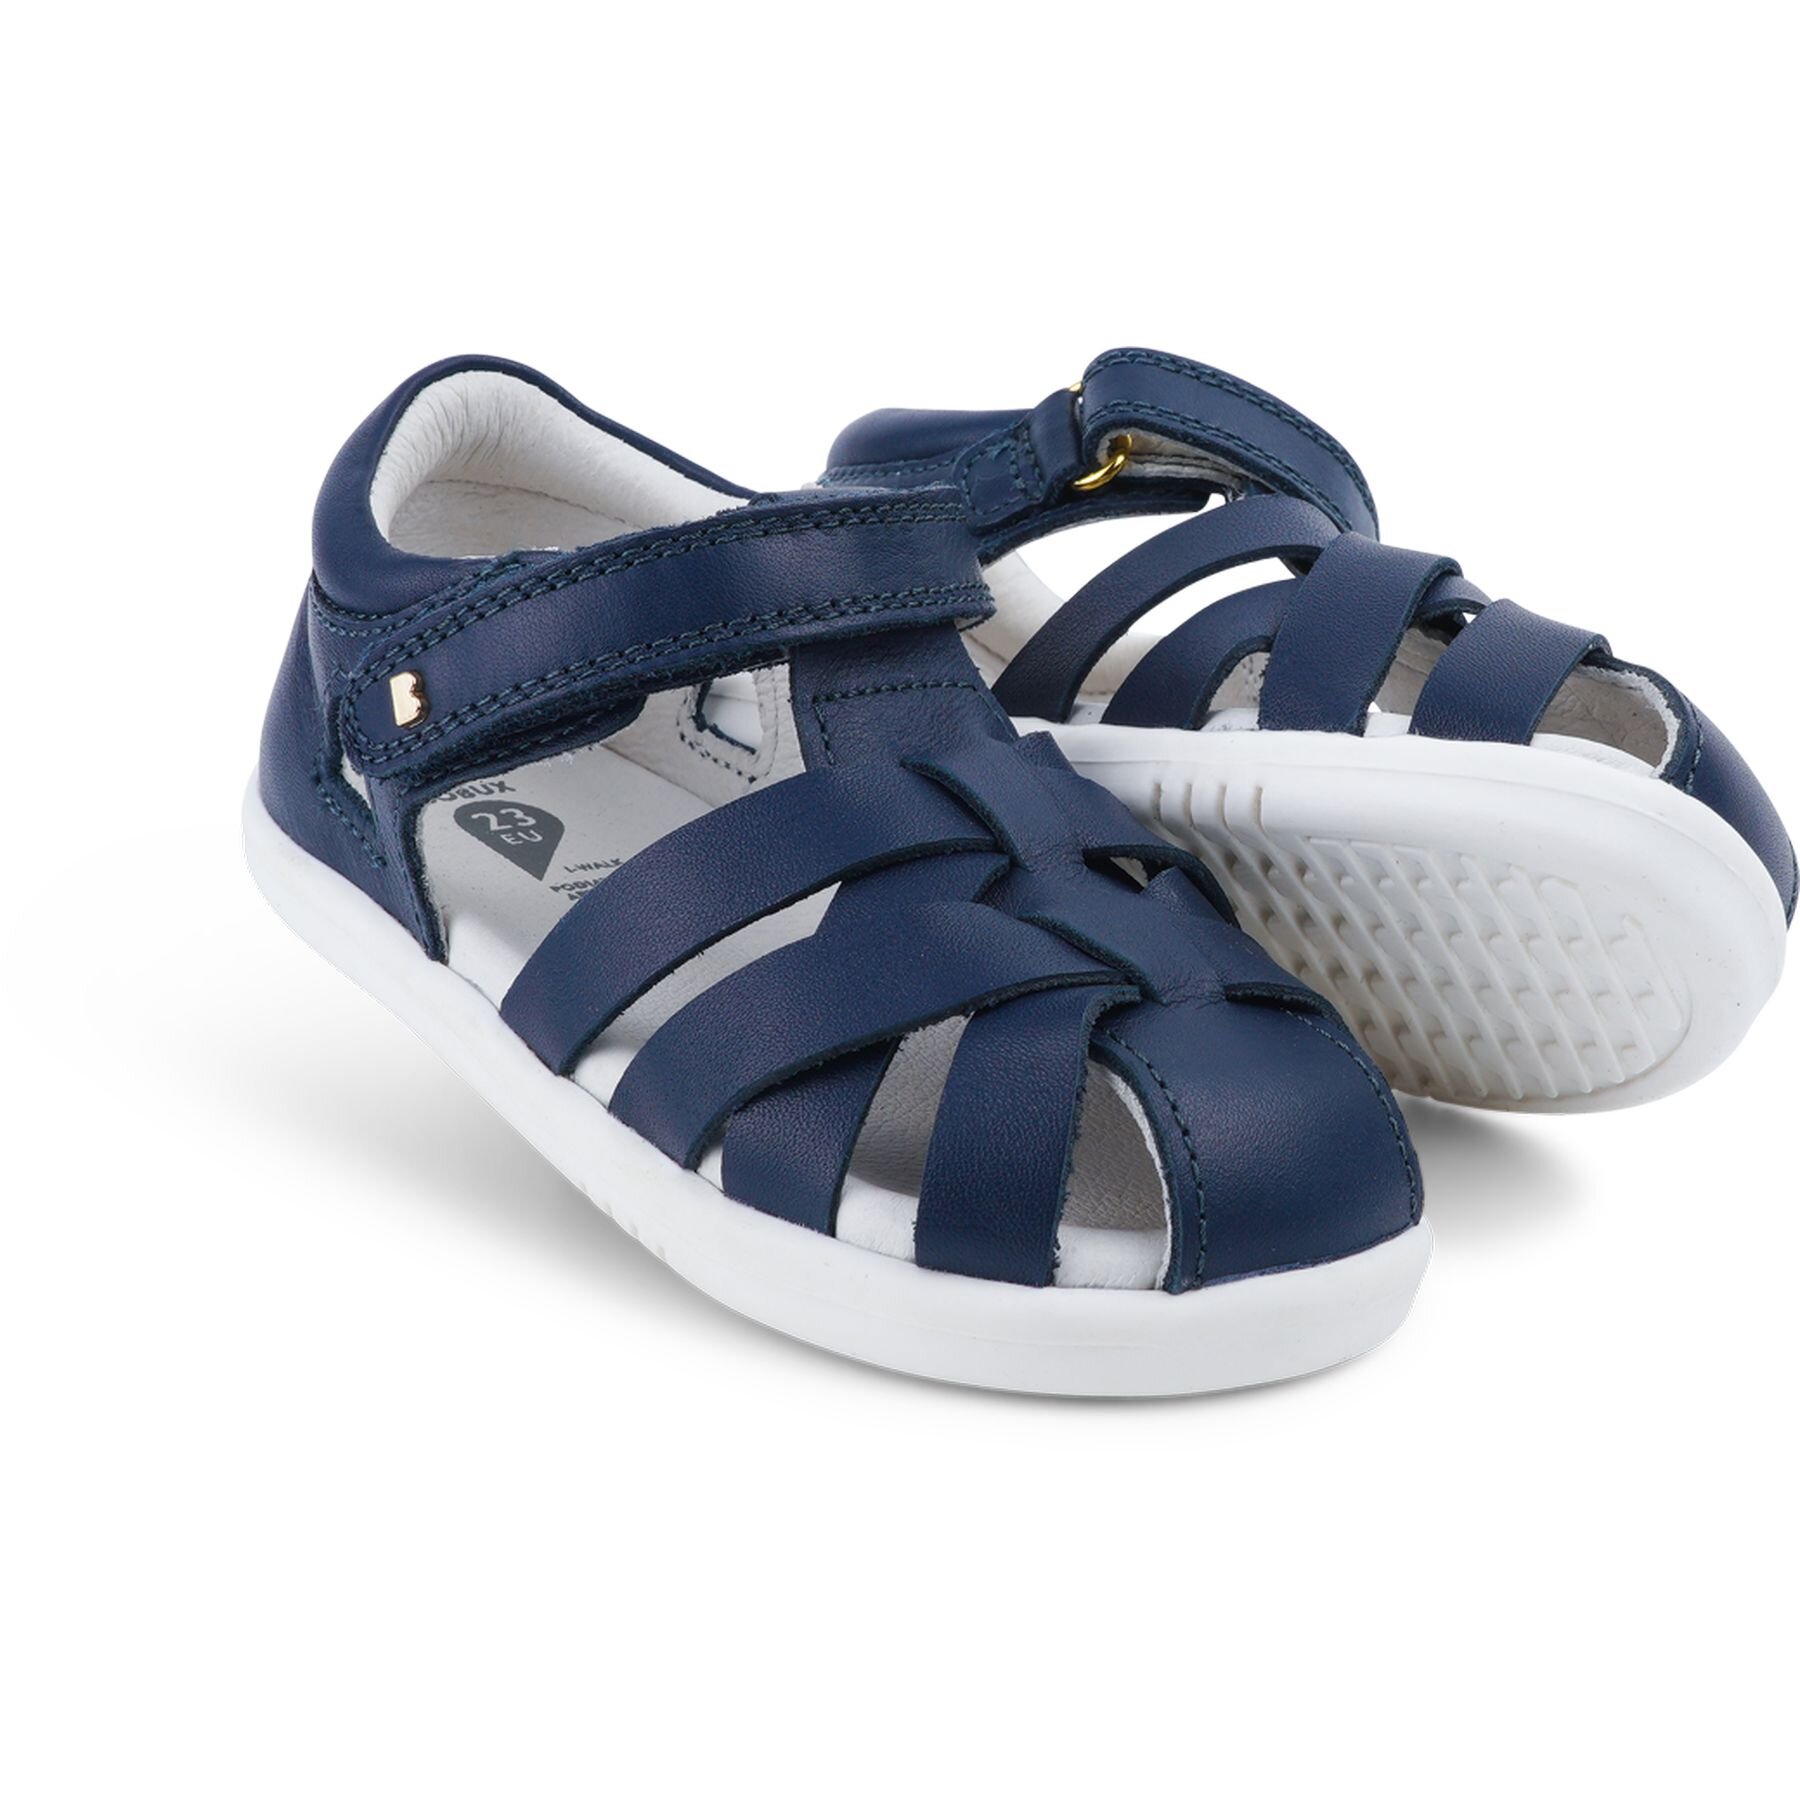 Bobux iWalk Tropicana II Sandal - Navy - FOOTWEAR-Girl : Kids Clothing NZ : Shop Online : Kid 